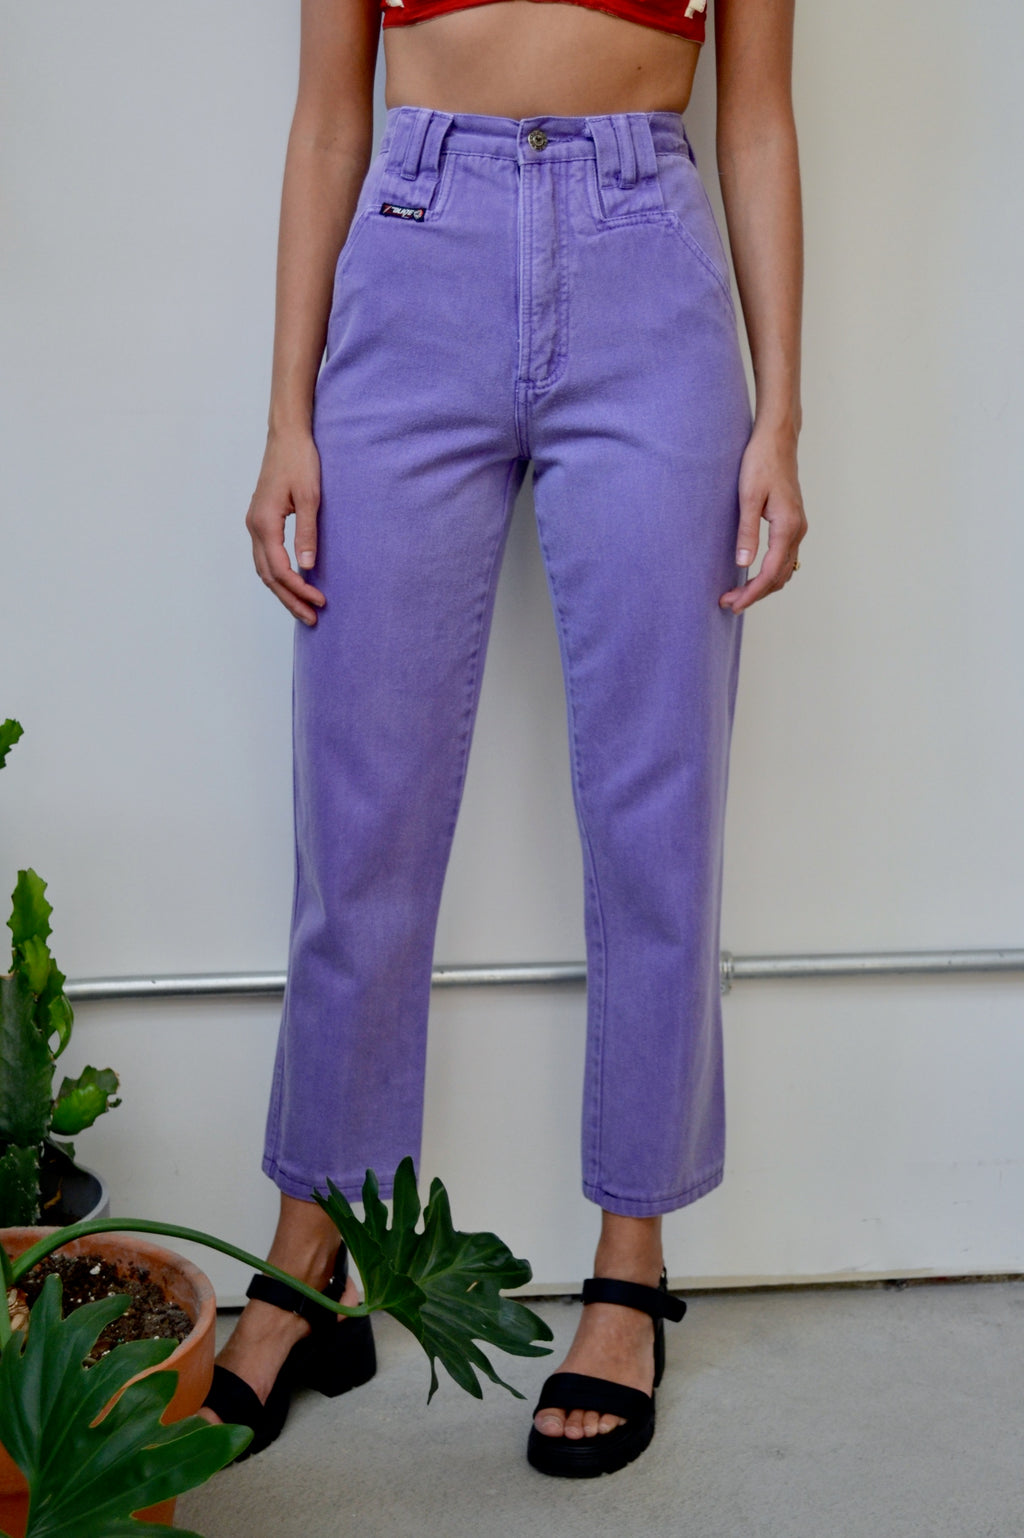 Purple Eighties Jeans